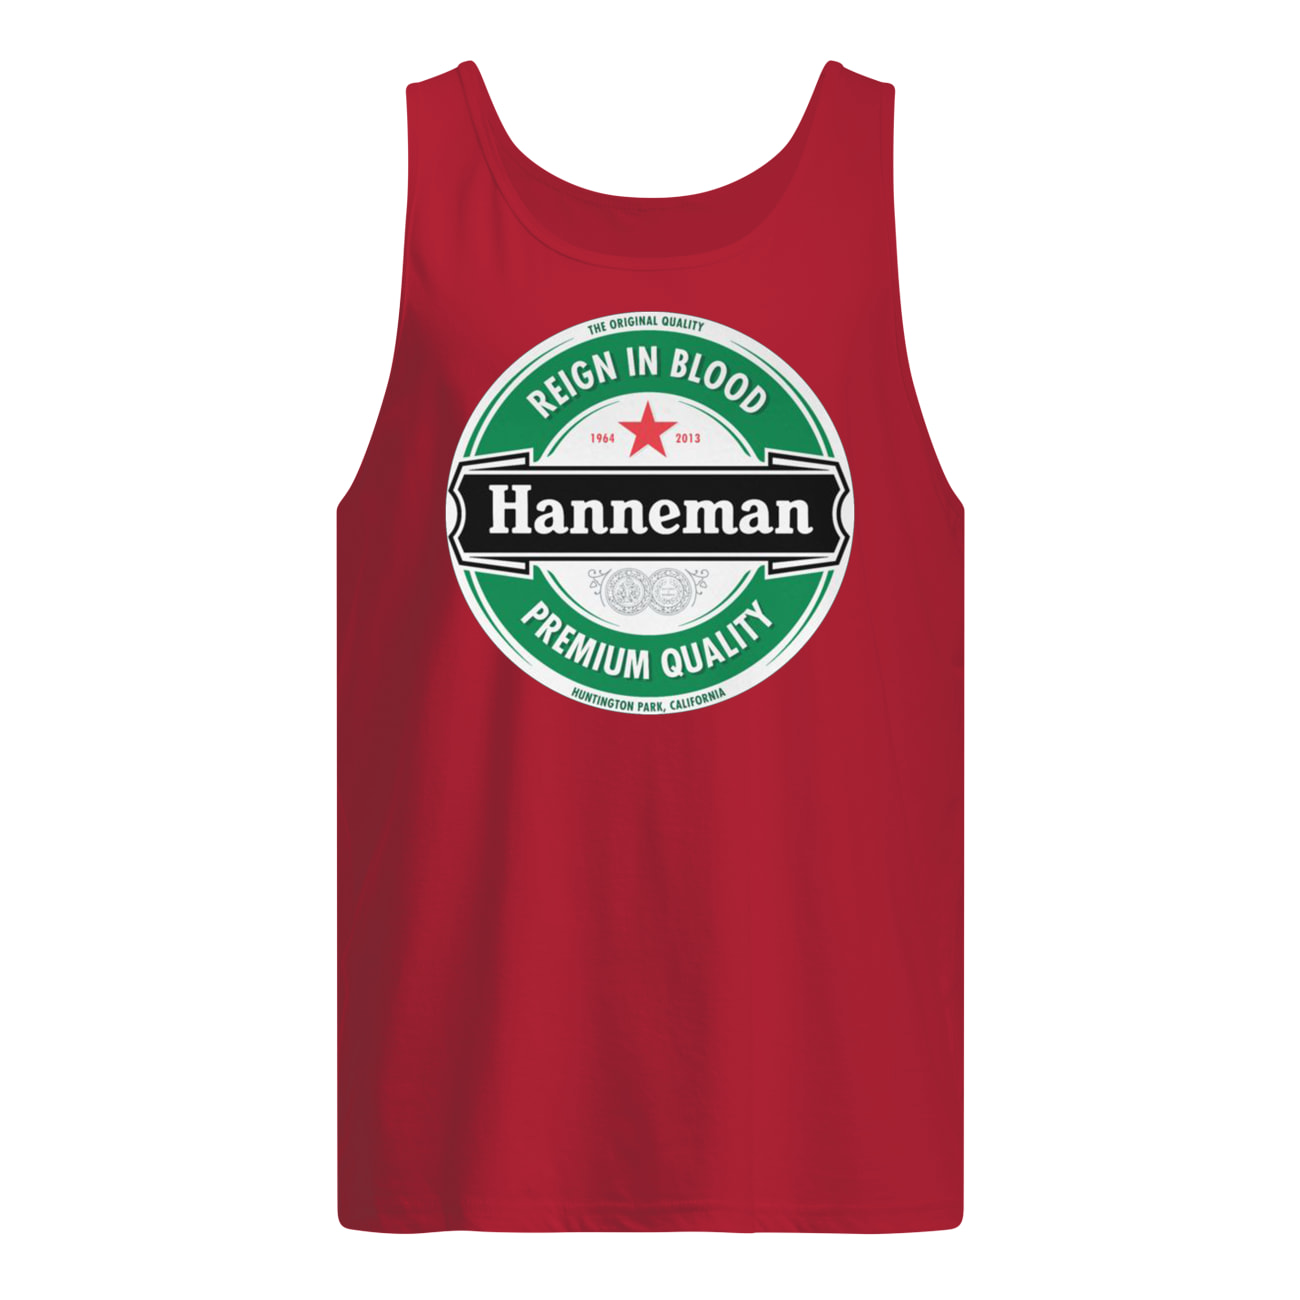 The original quality reign in blood hanneman premium quality tank top